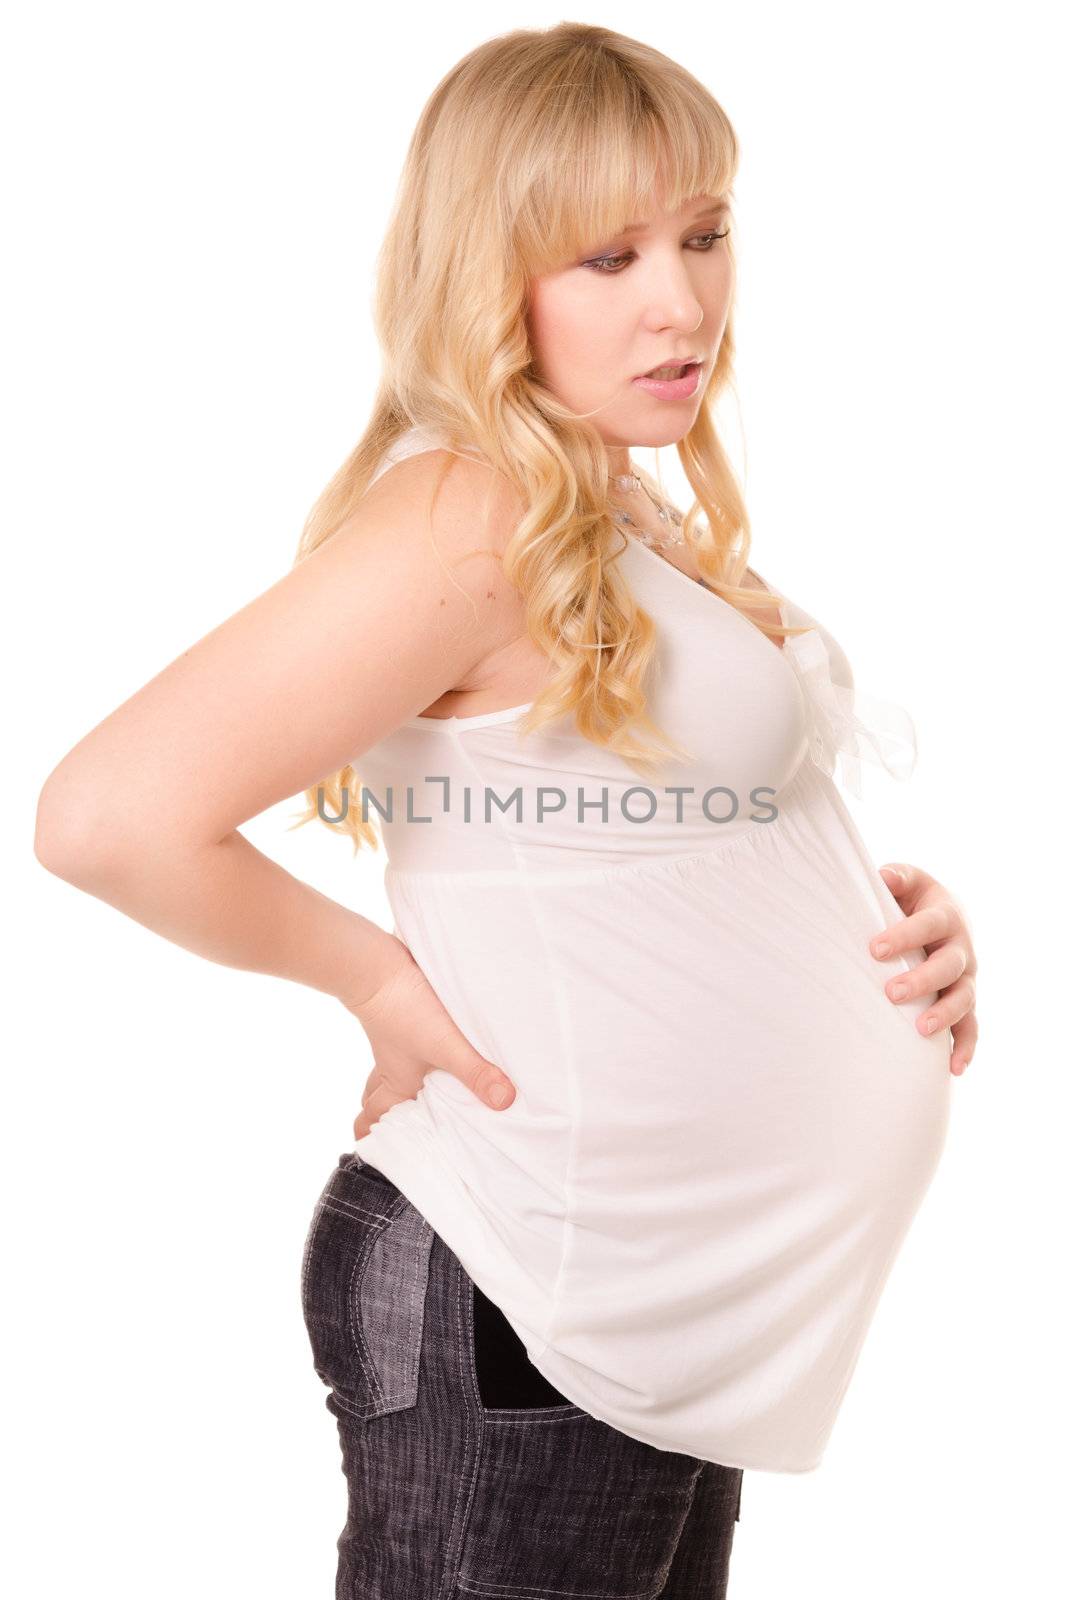 Pregnant woman feels discomfort in back by iryna_rasko